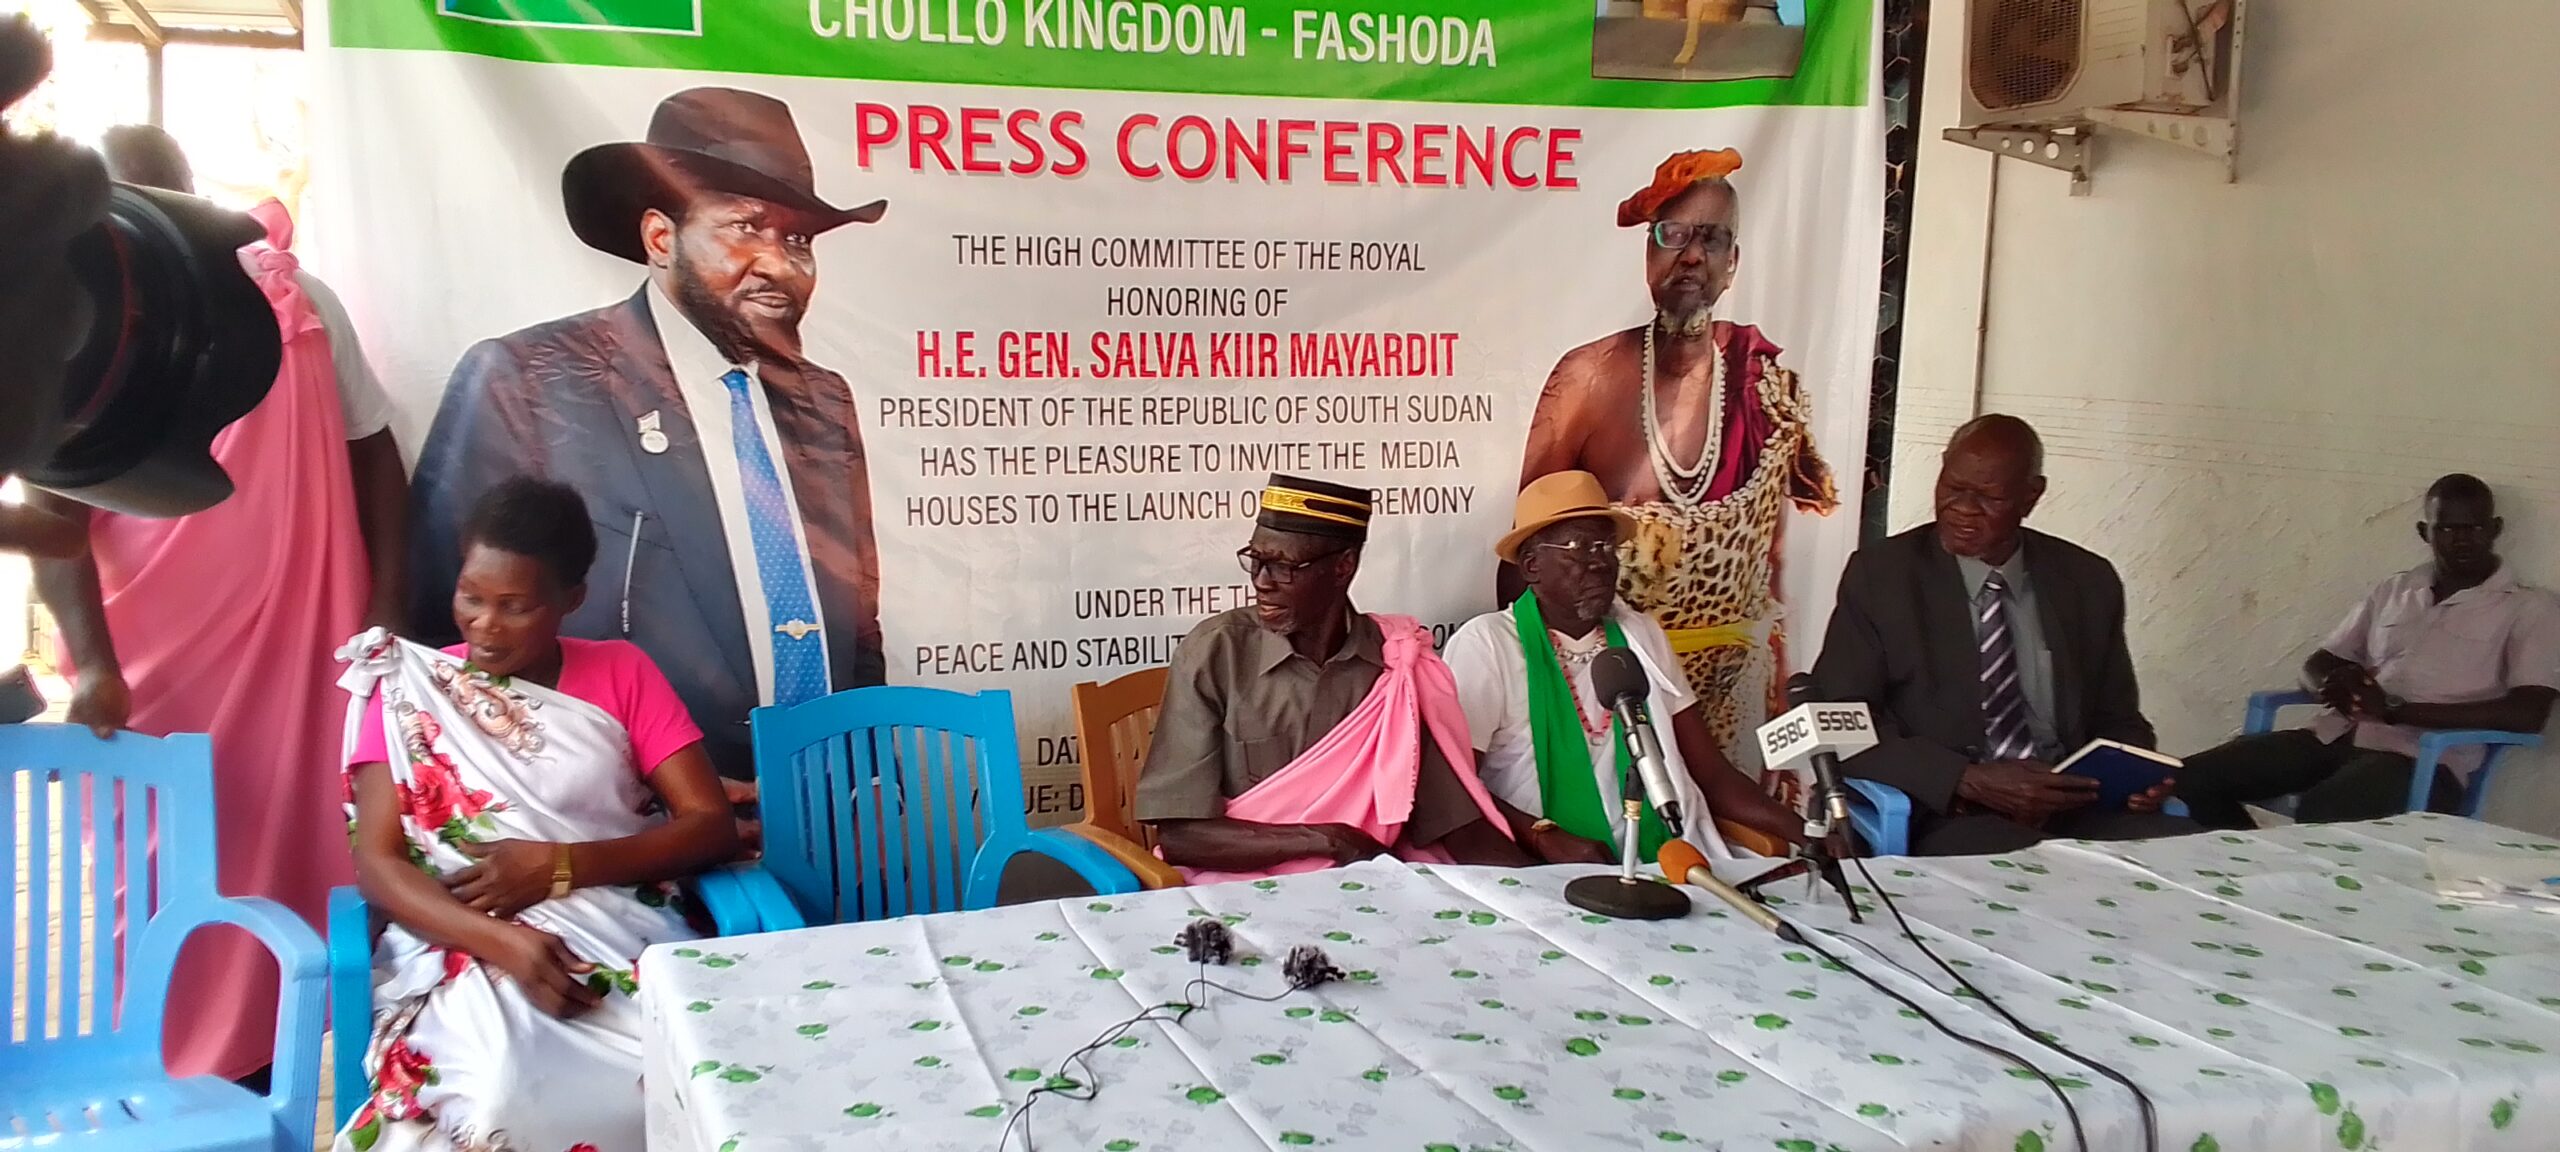 Chollo King to honor President Kiir’s peace efforts